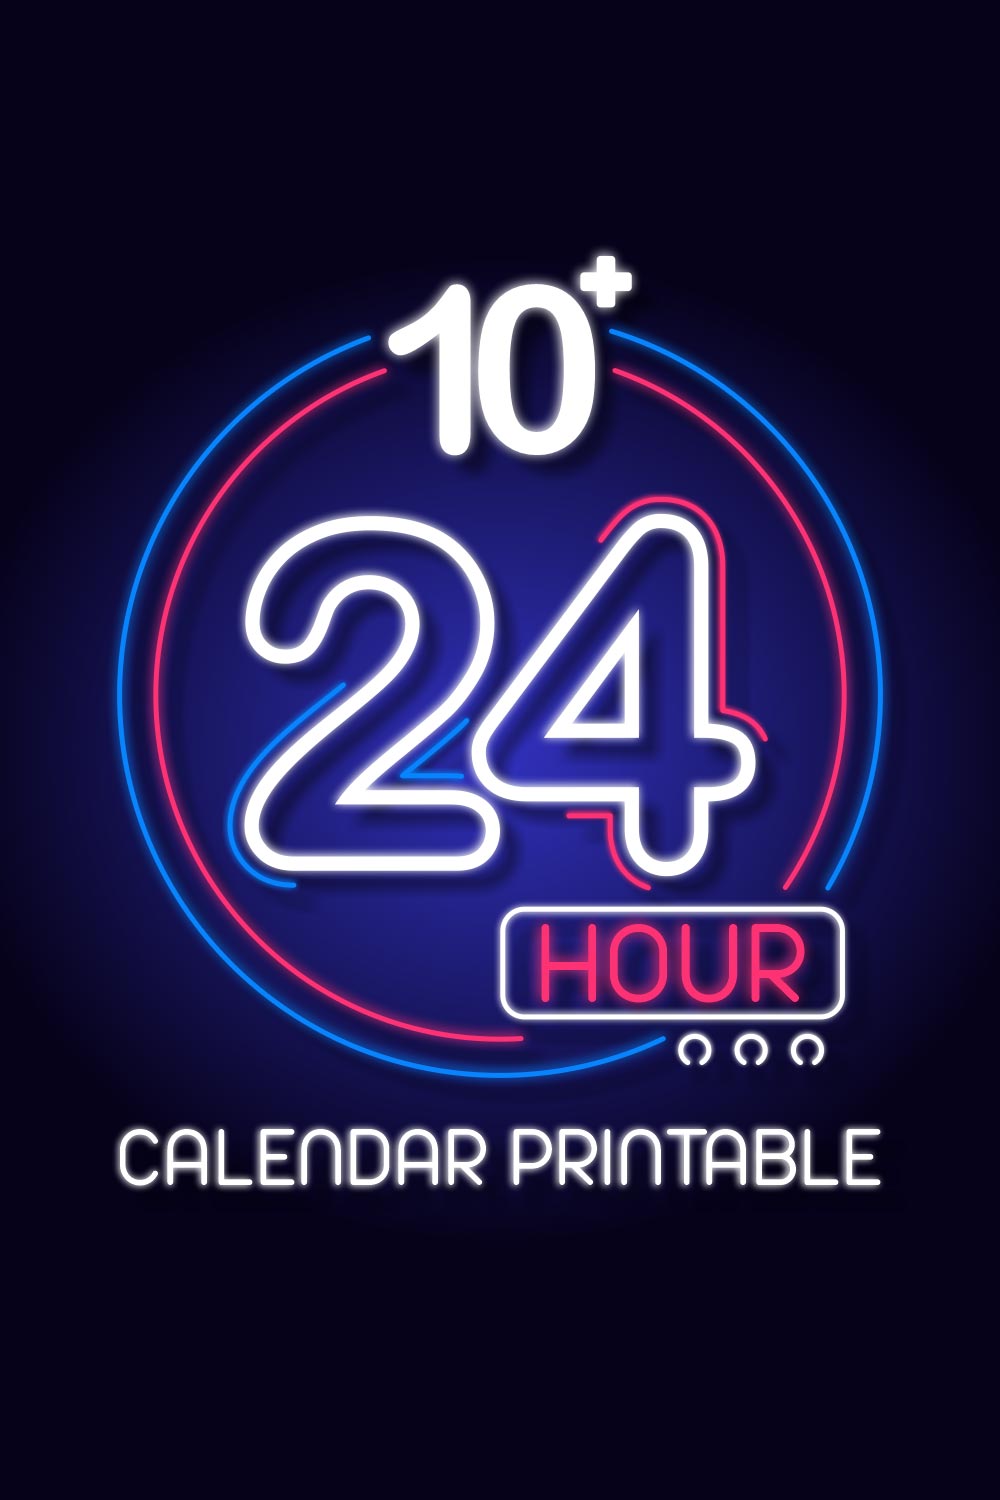 24 Hour Calendar Printable